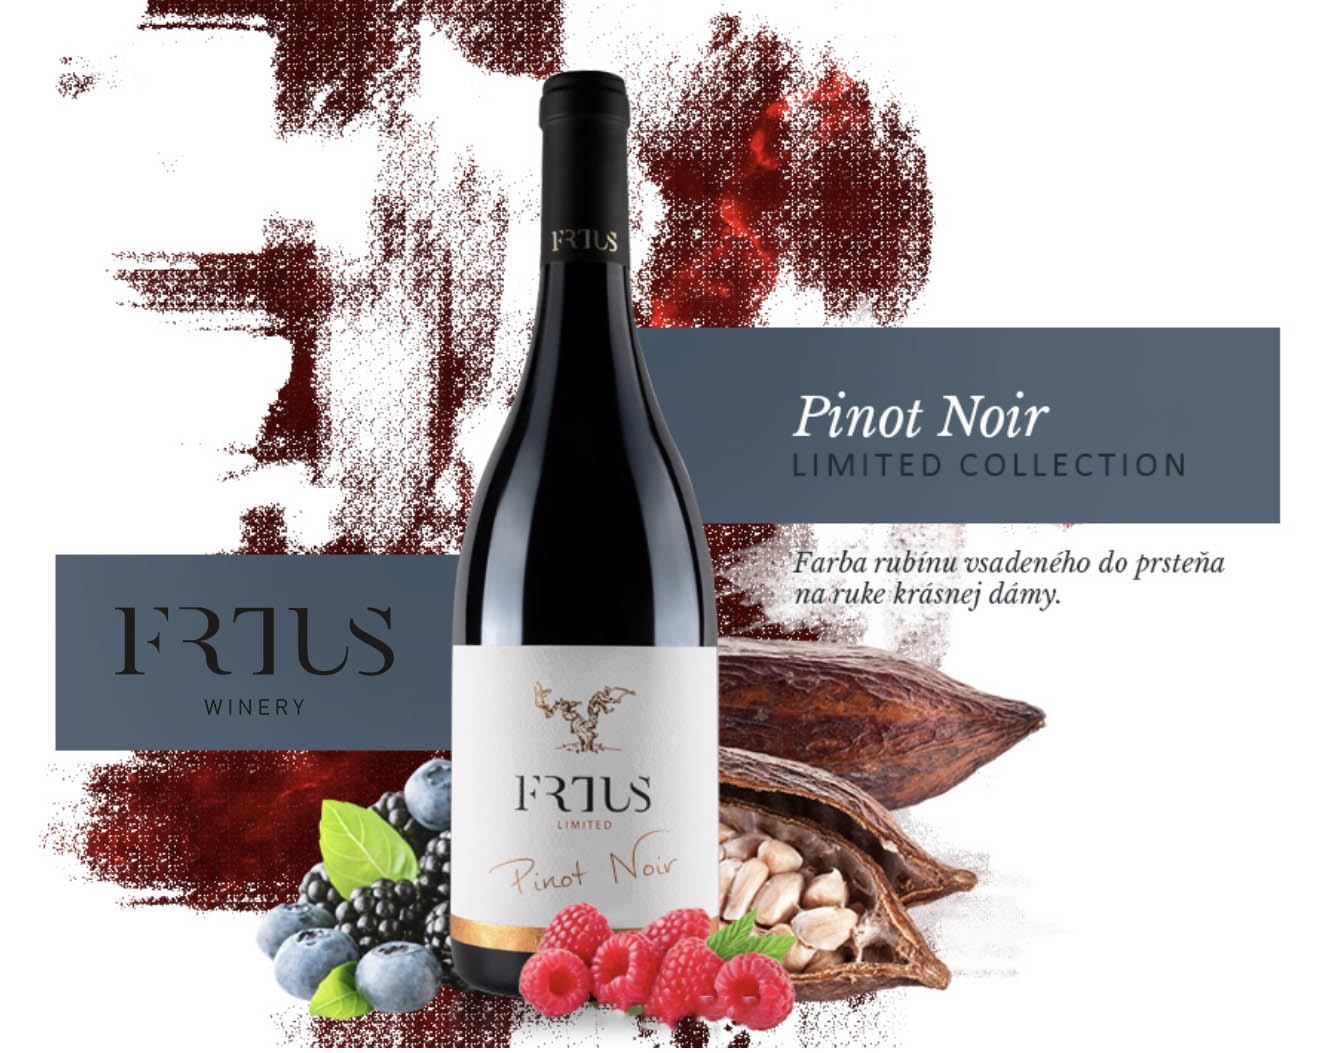 Frtus winery